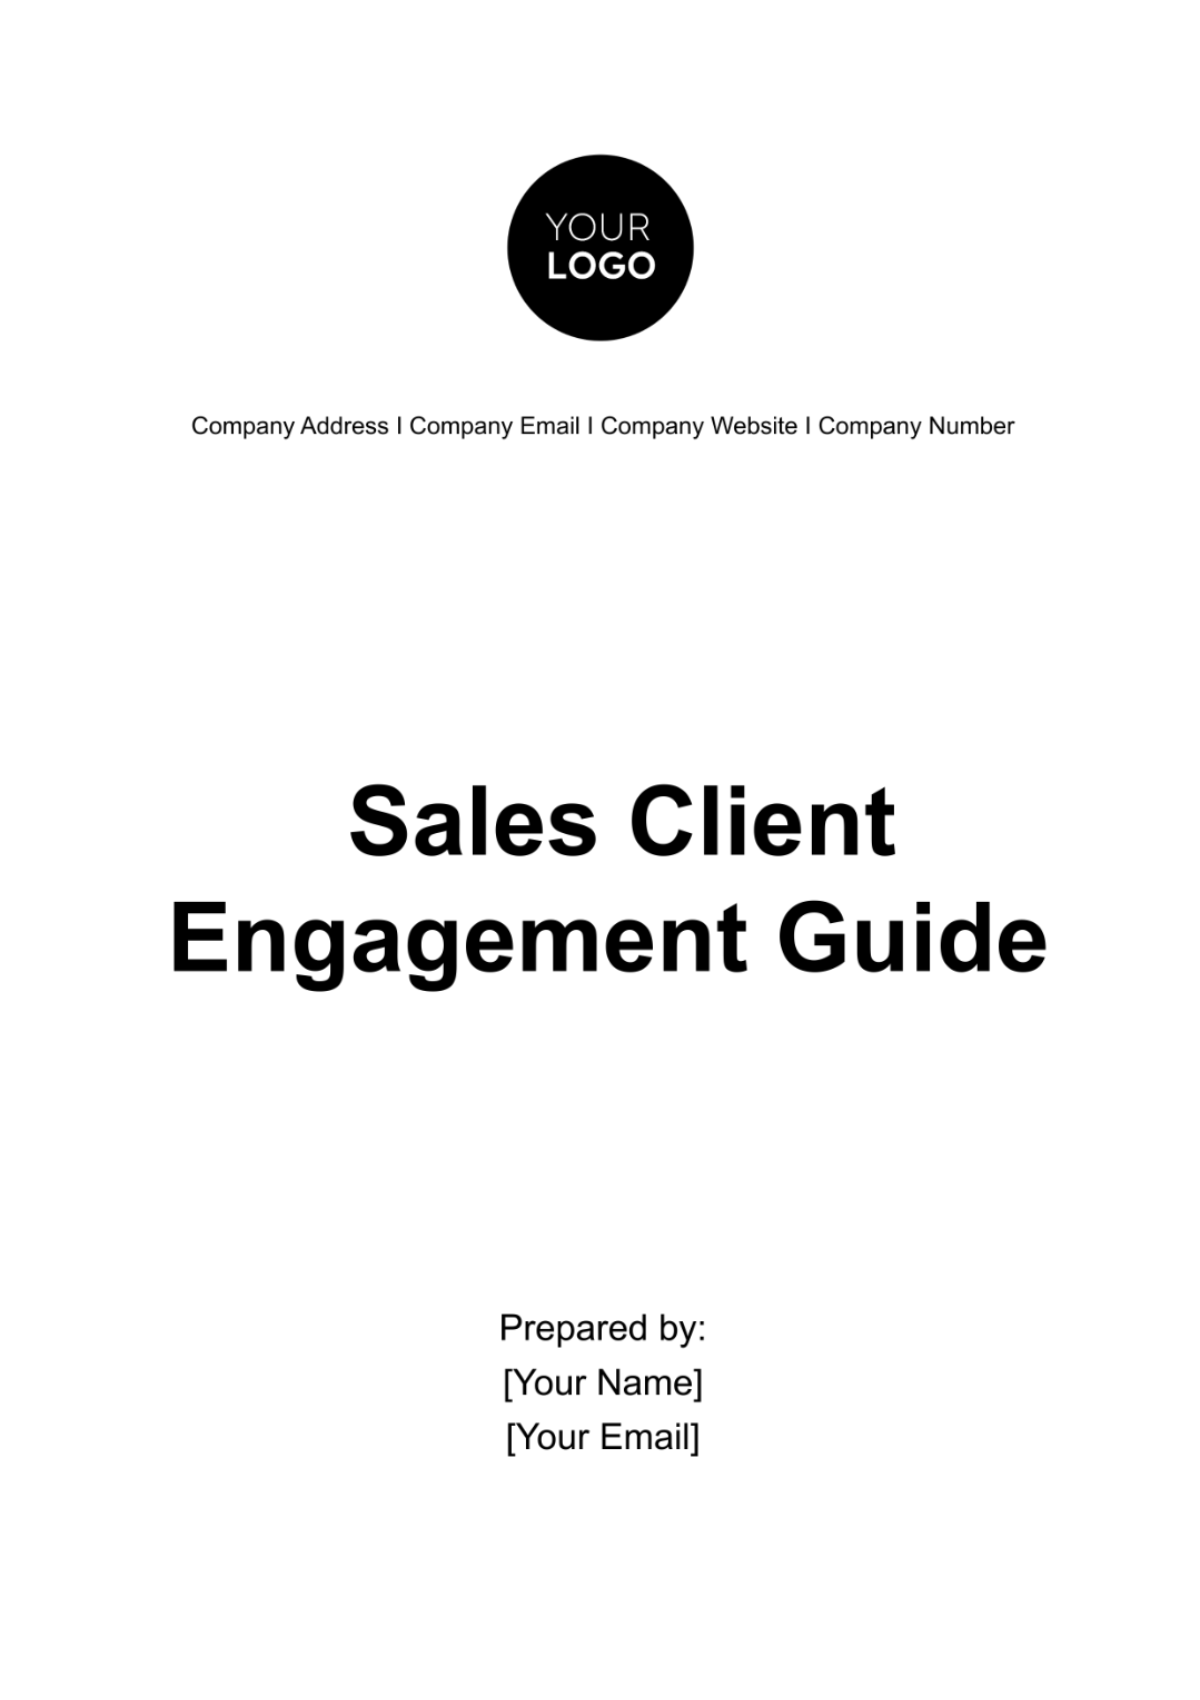 Sales Client Engagement Guide Template